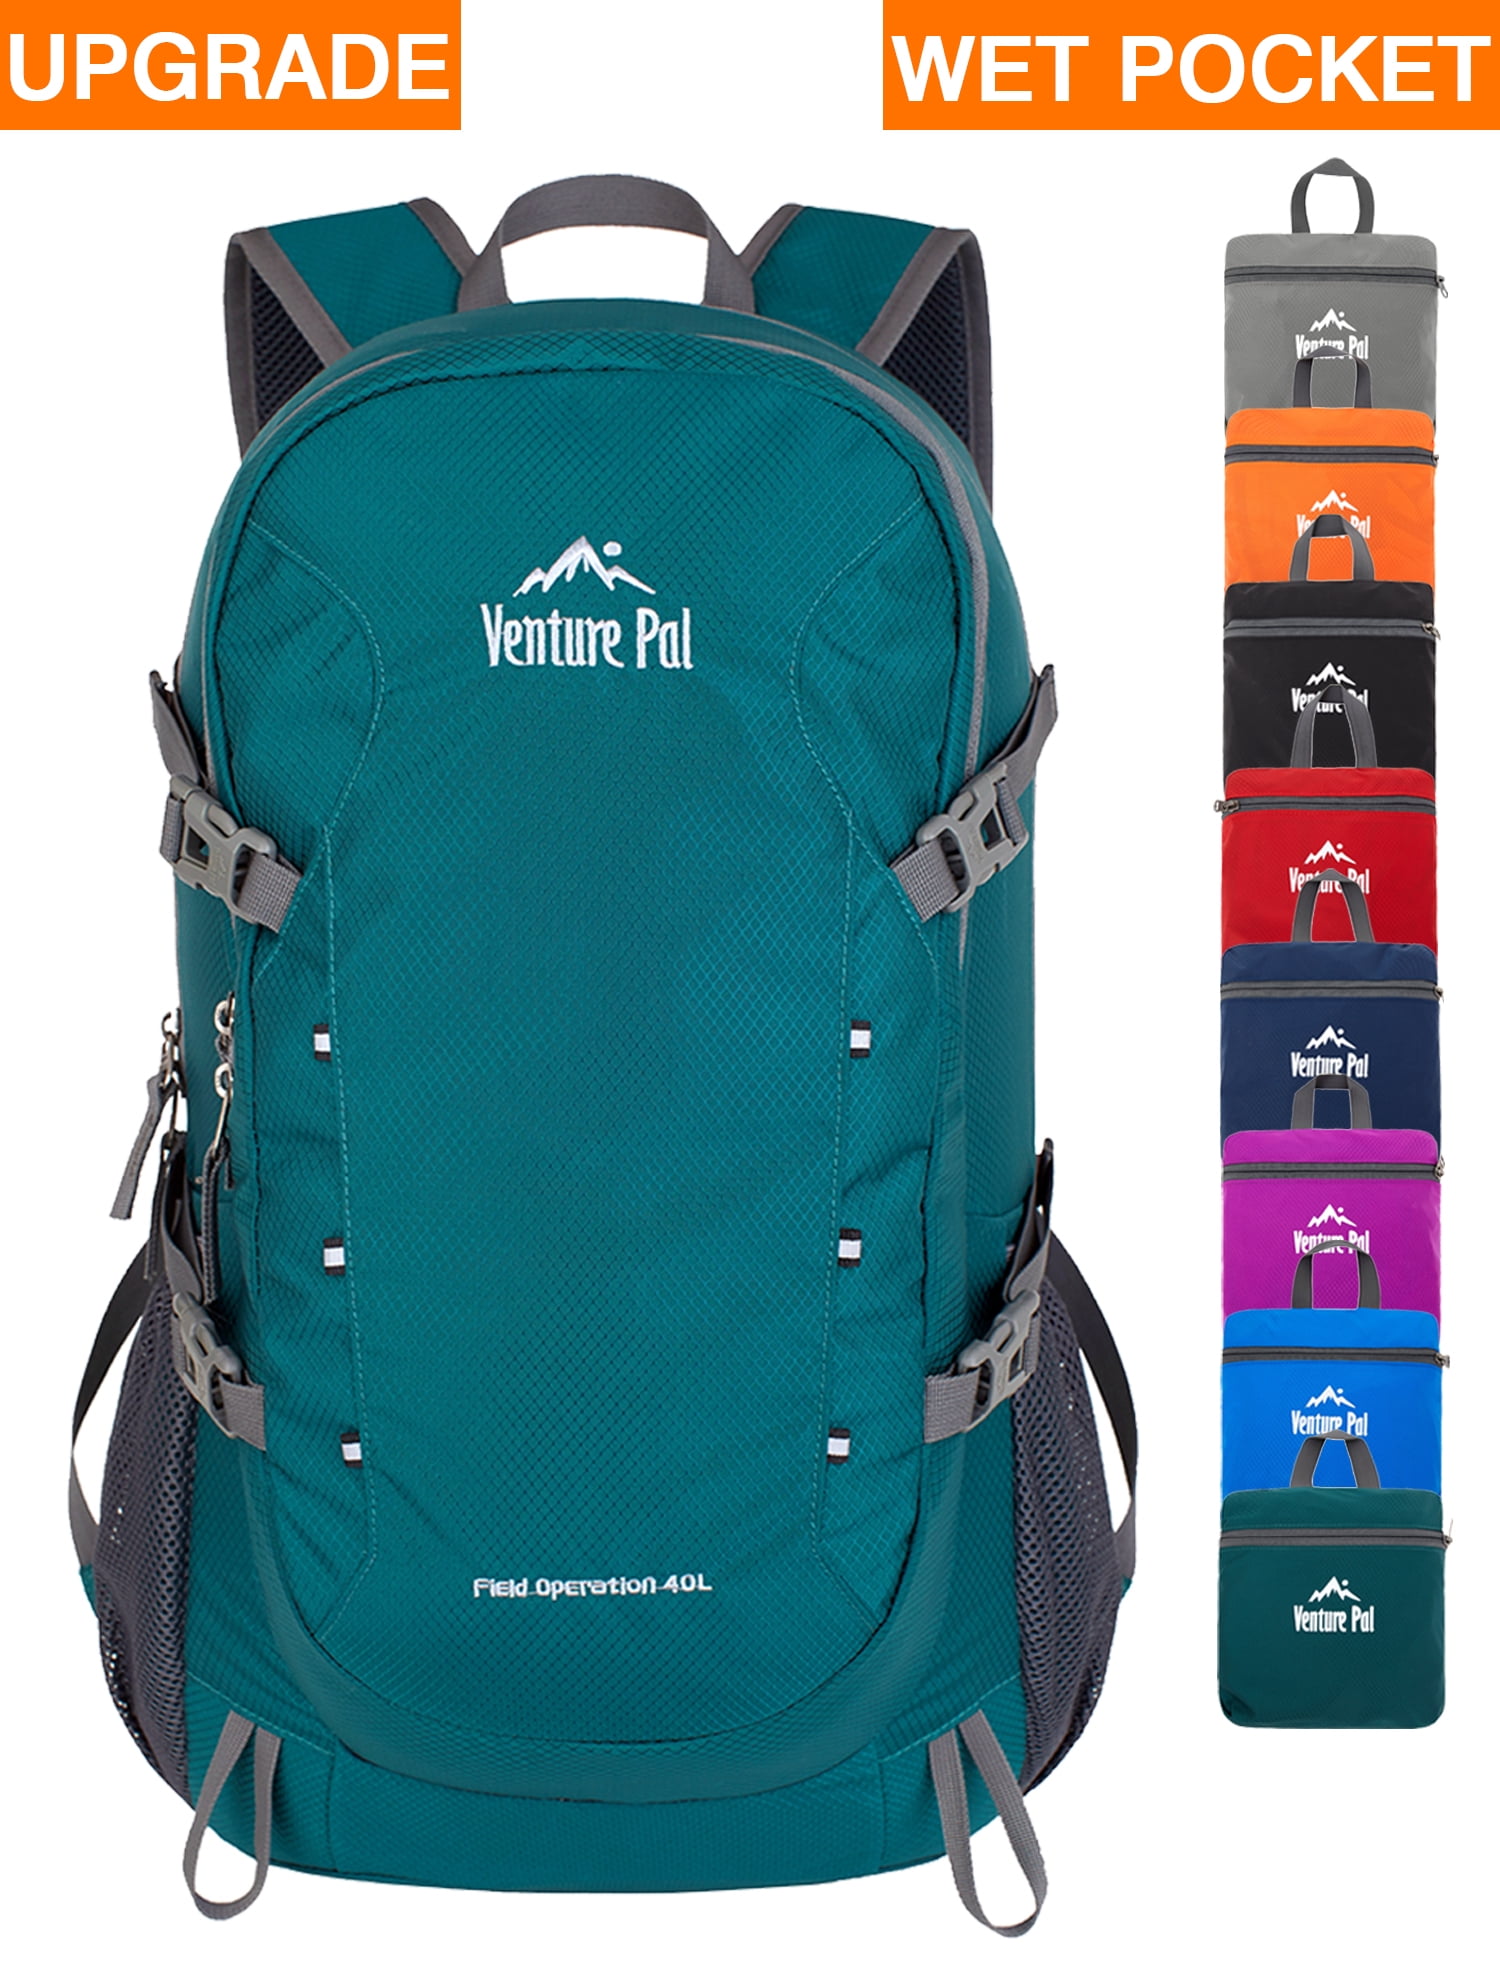 Venture Pal 40L Lightweight Packable Travel Hiking Backpack Daypack 